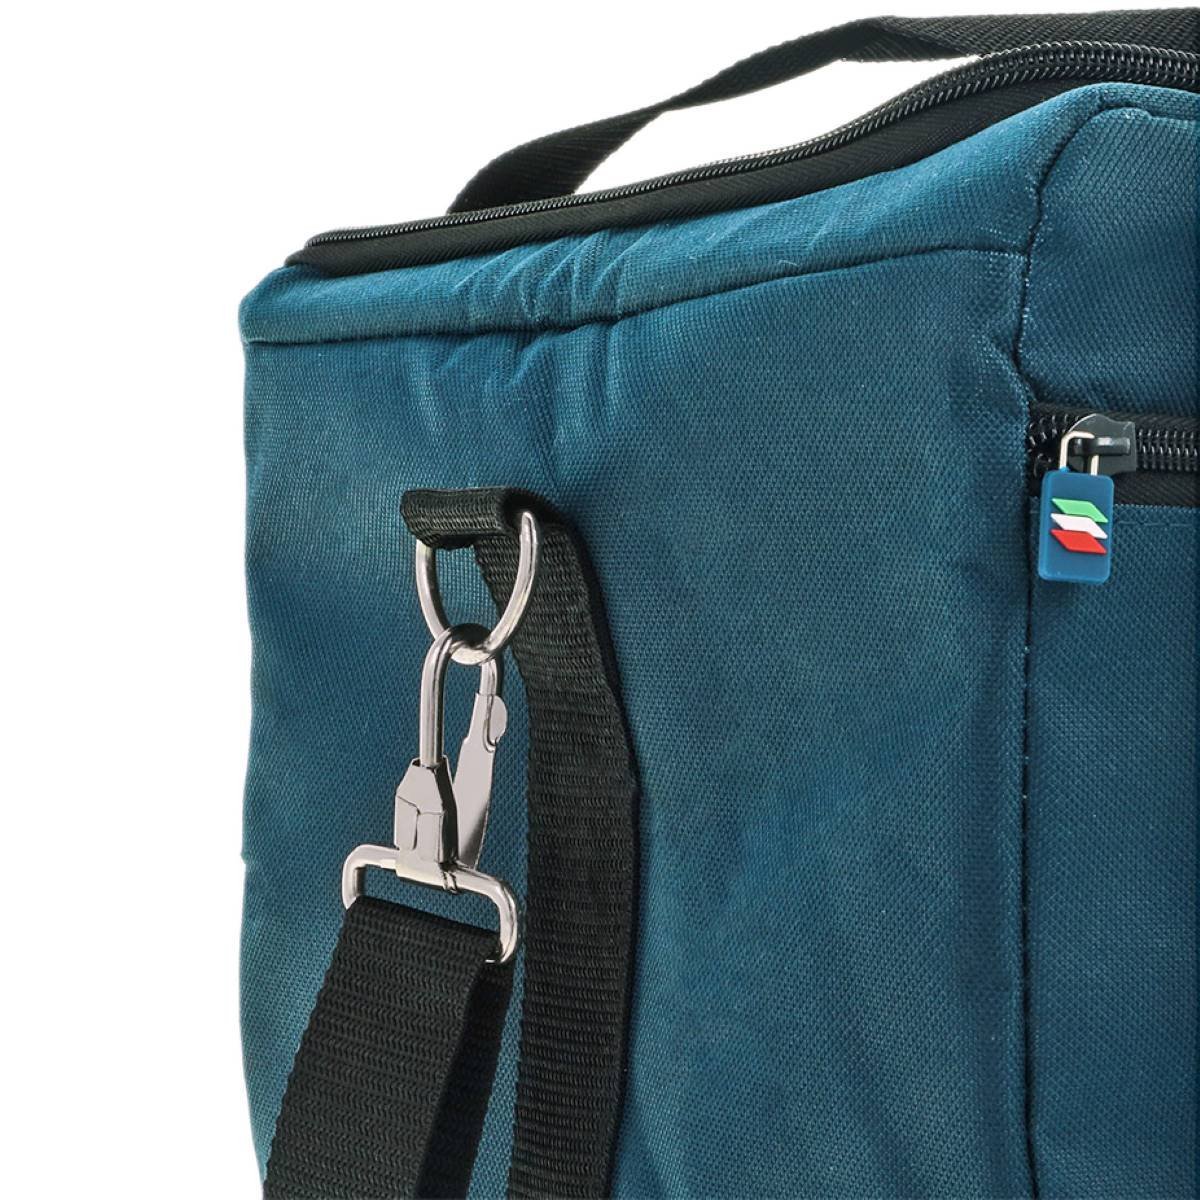 Cubo XL - Detailing Bag